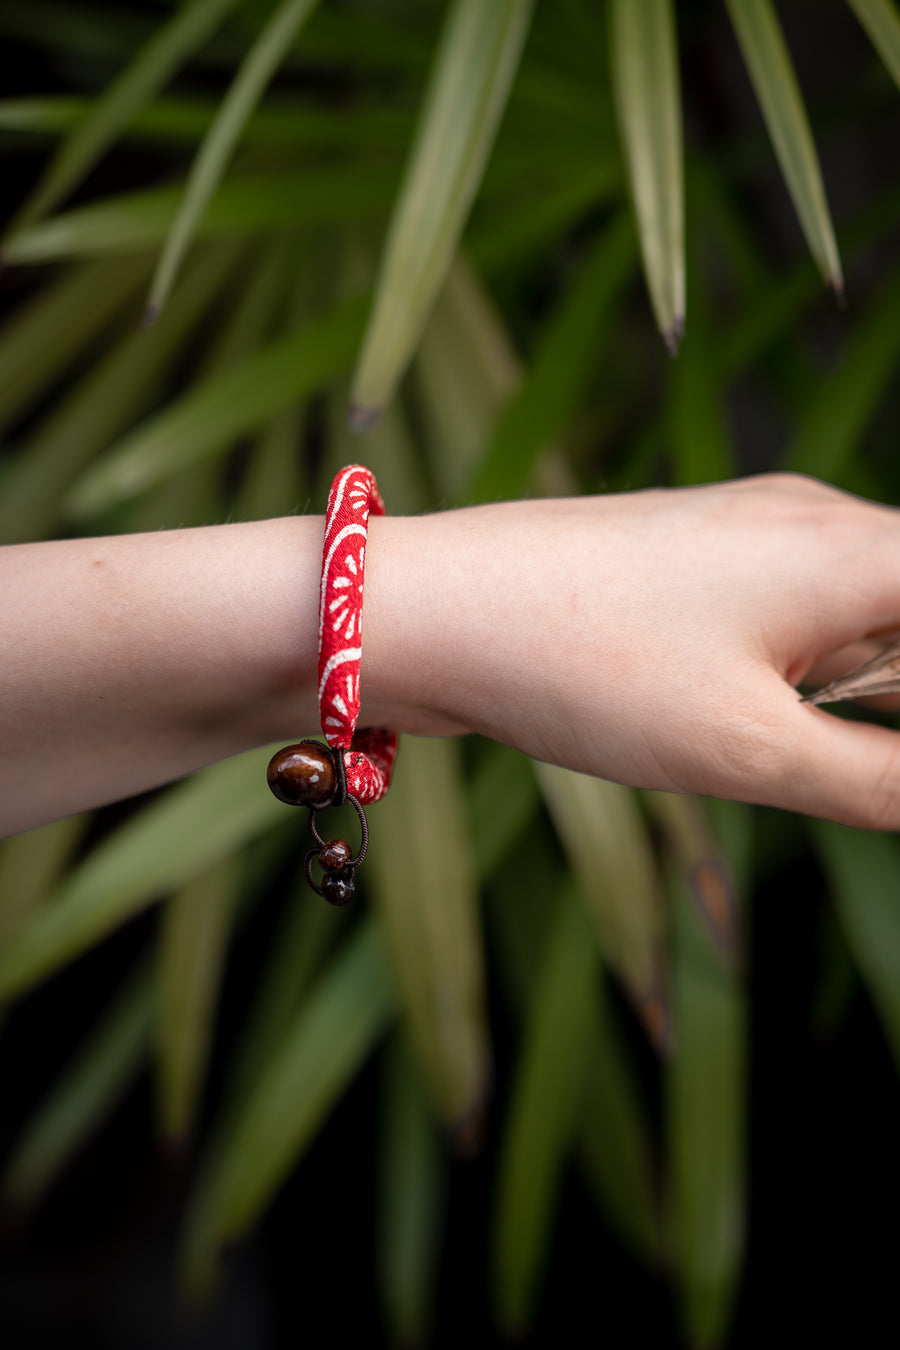 Kimono Fabric Bracelet—19 cm—RED